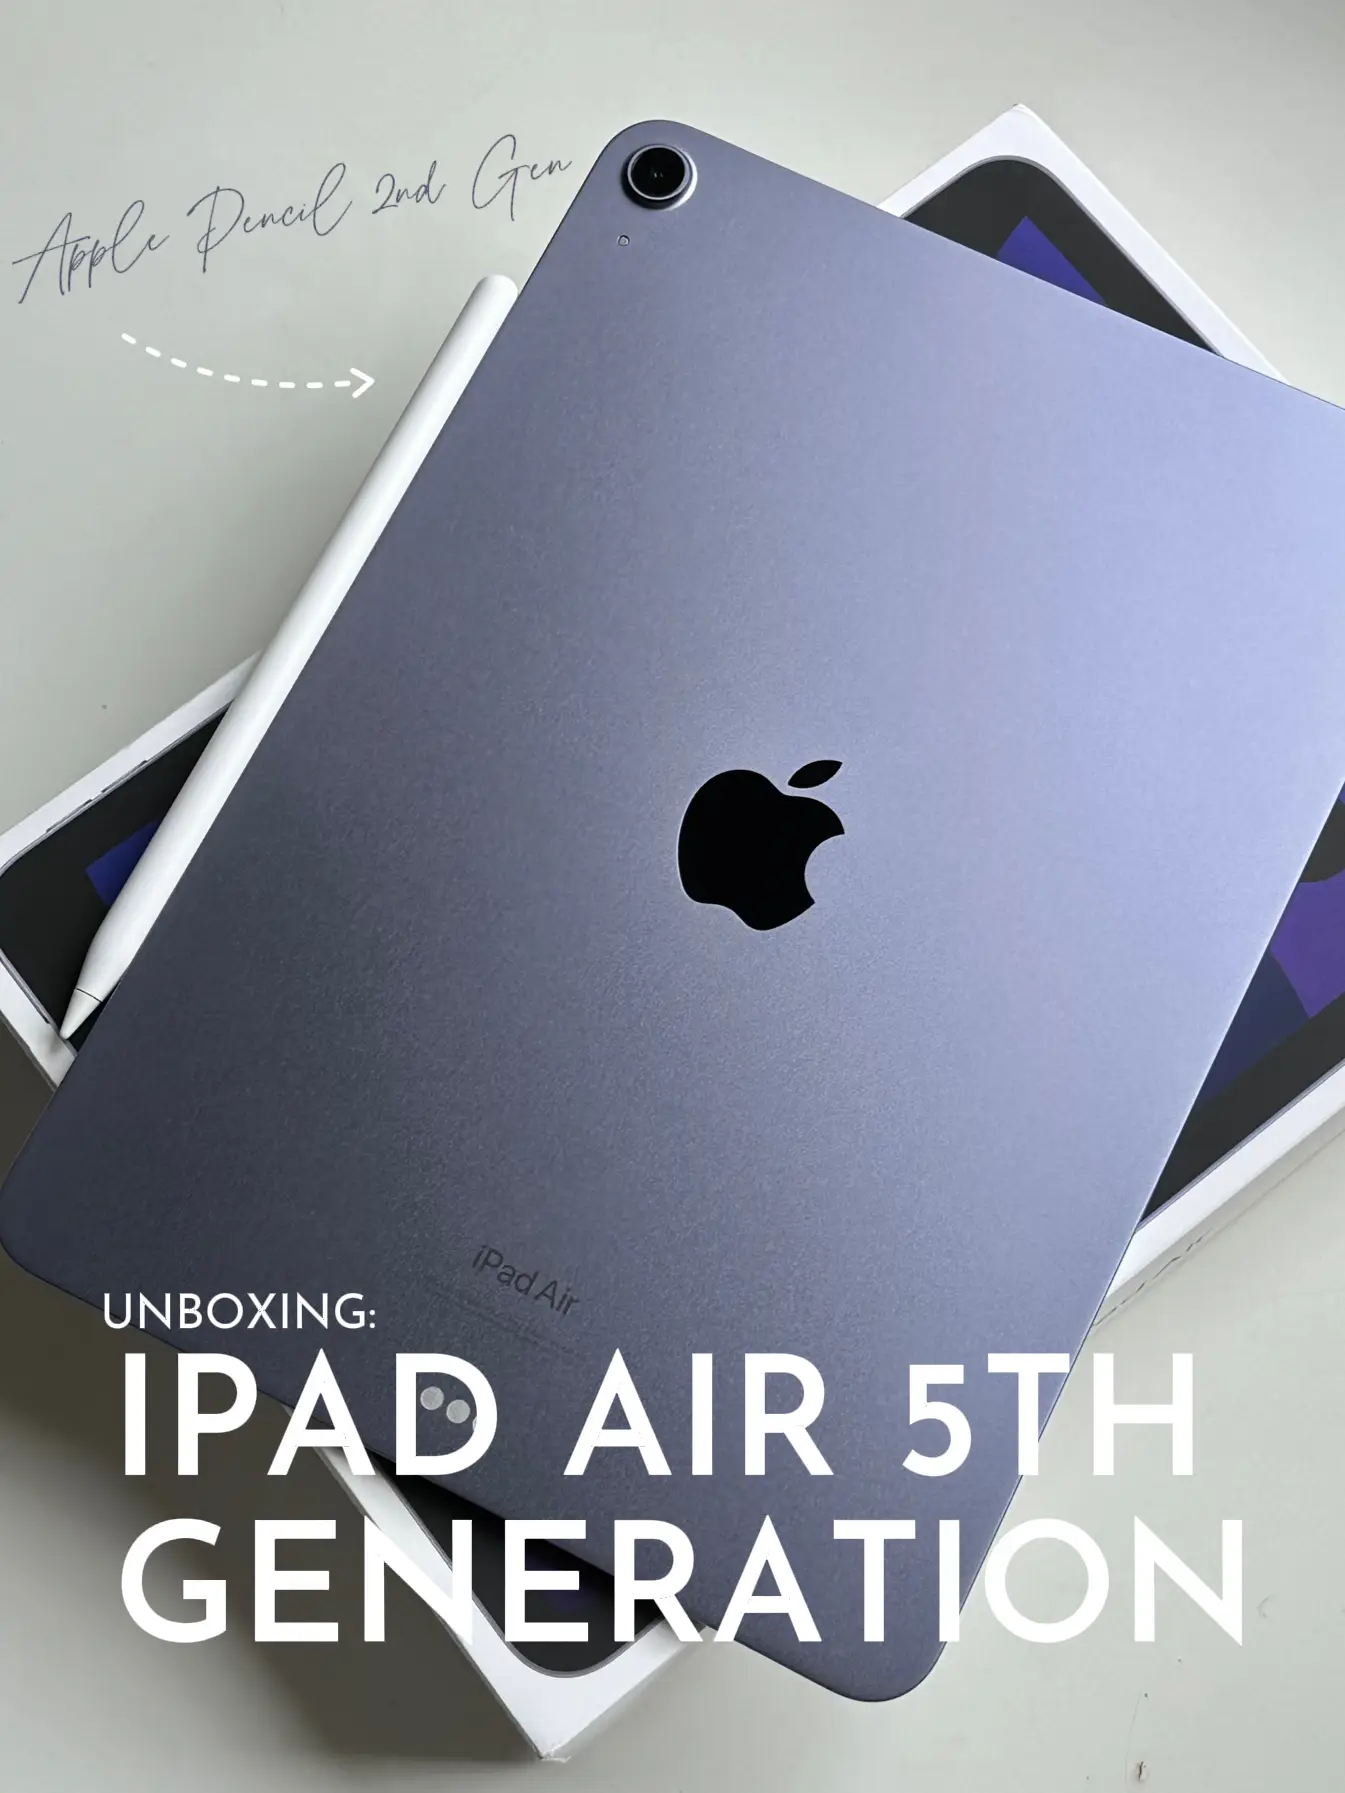 Unboxing the Apple iPad mini 4 